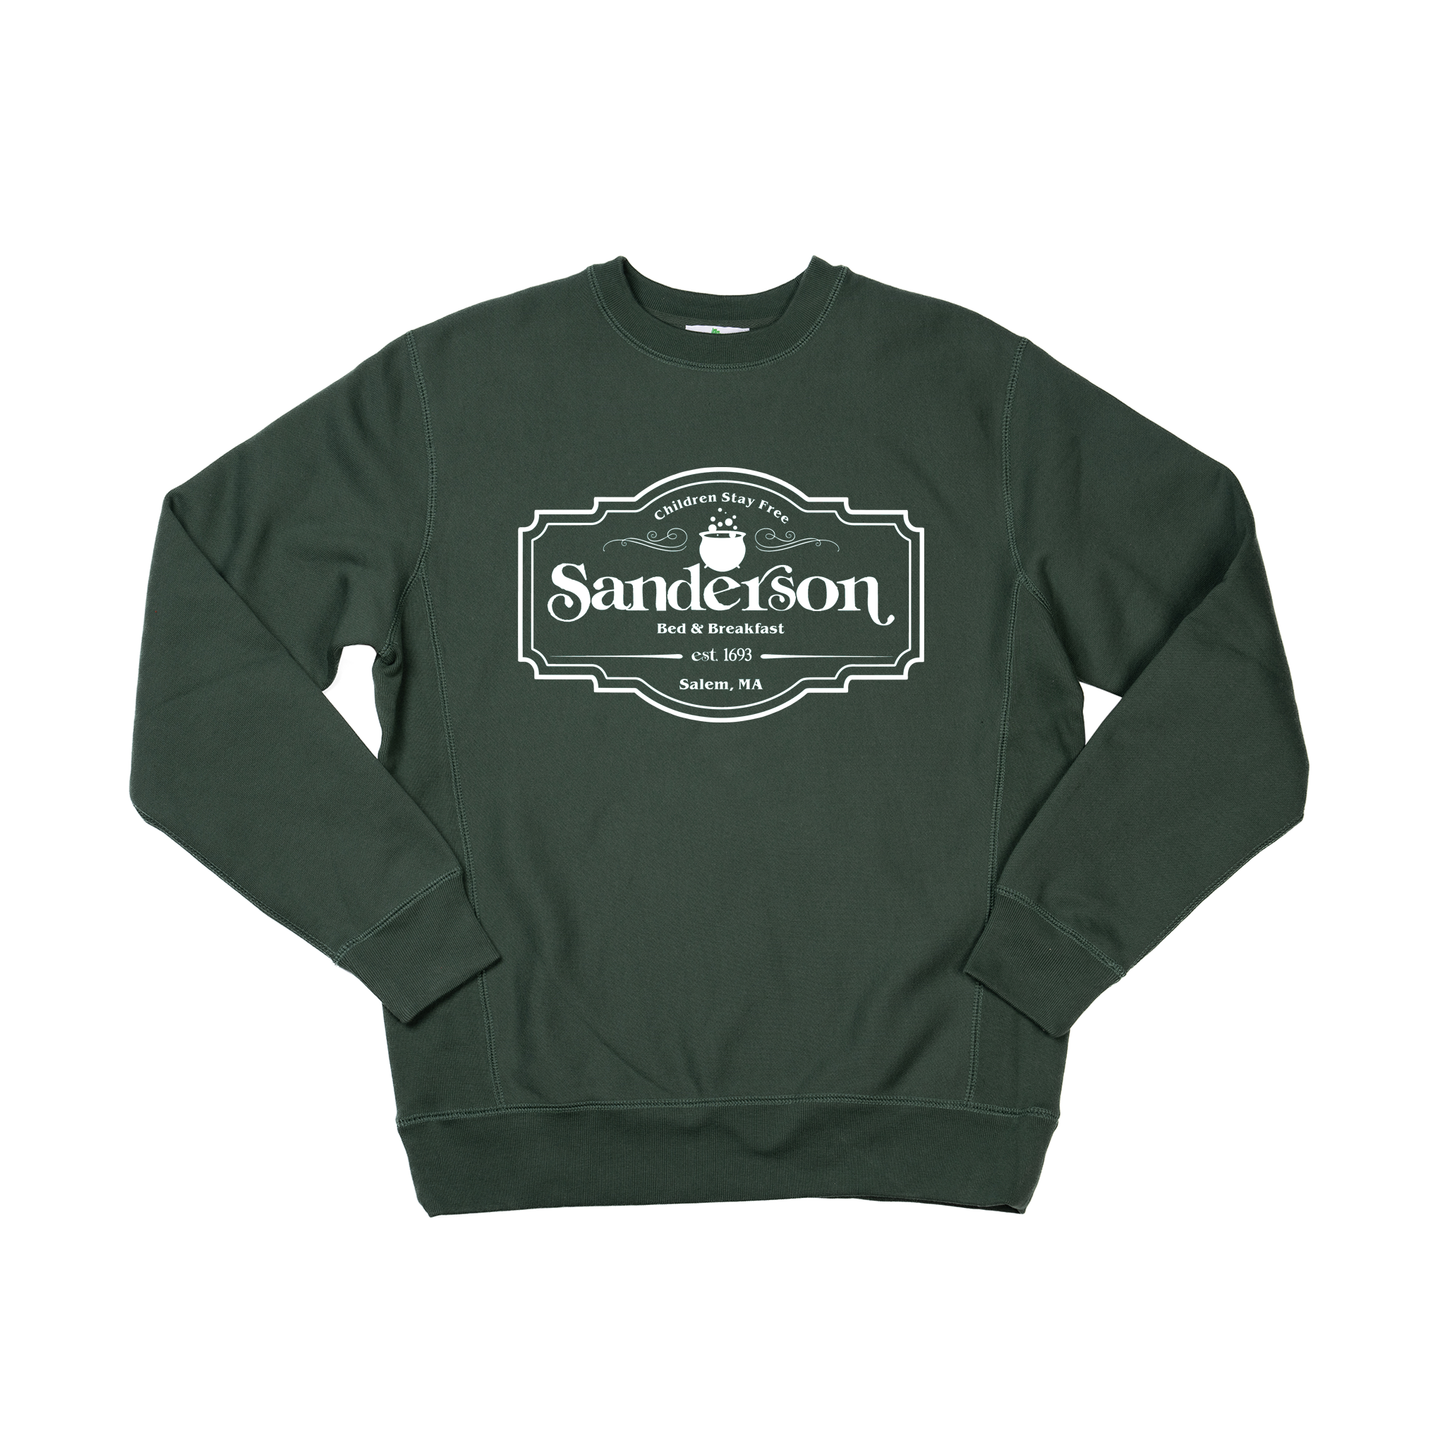 Sanderson Bed + Breakfast (White) - Heavyweight Sweatshirt (Pine)